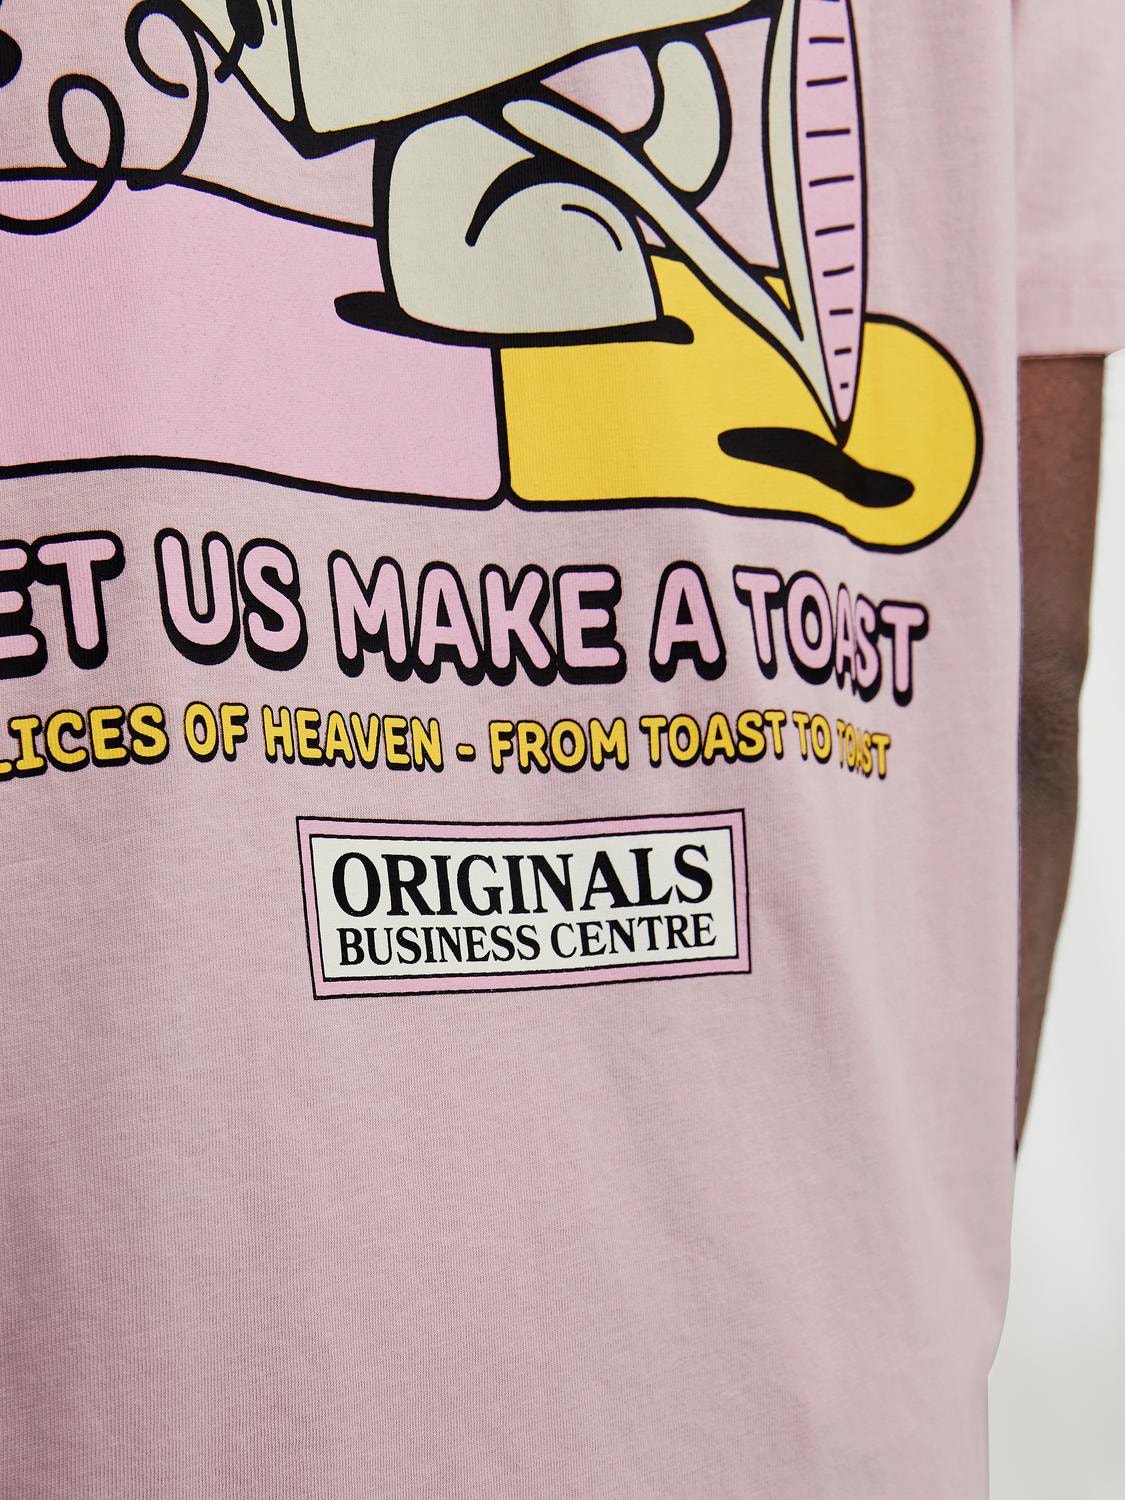 Jack & Jones T-shirt Imprimé Col rond -Pink Nectar - 12254168